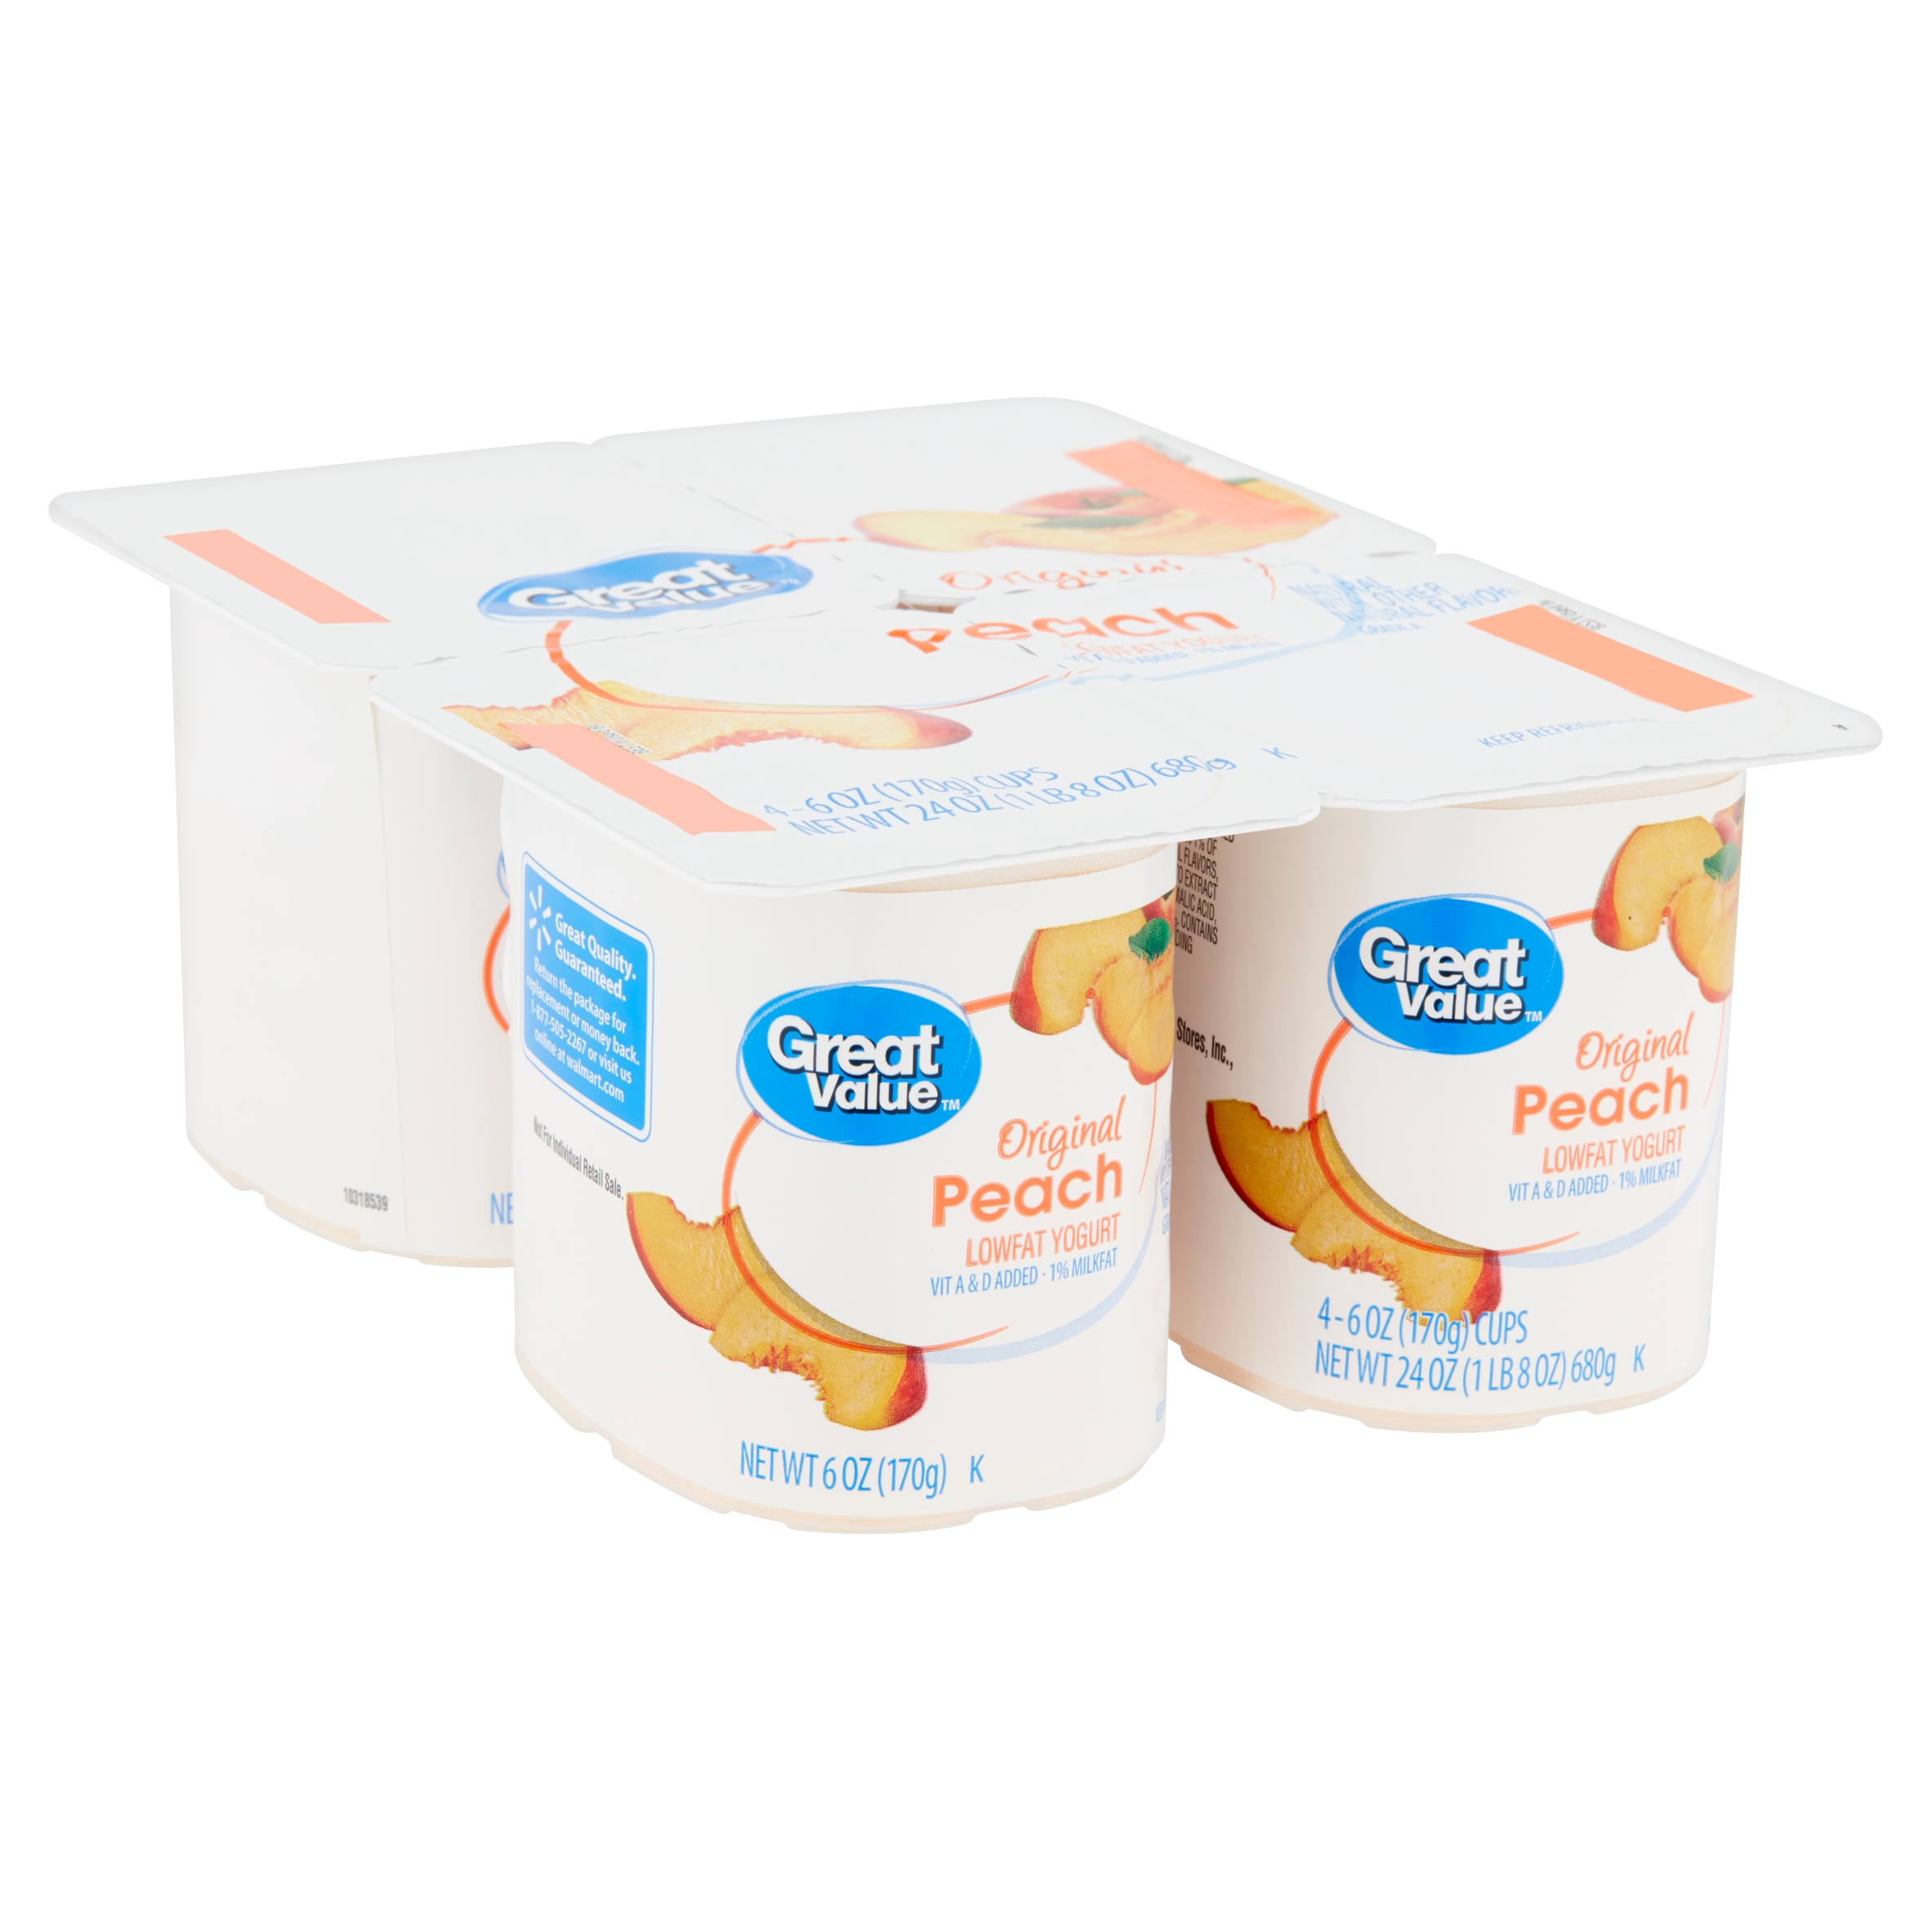 Great Value Original Peach Lowfat Yogurt, 6 Oz, 4 Count Image